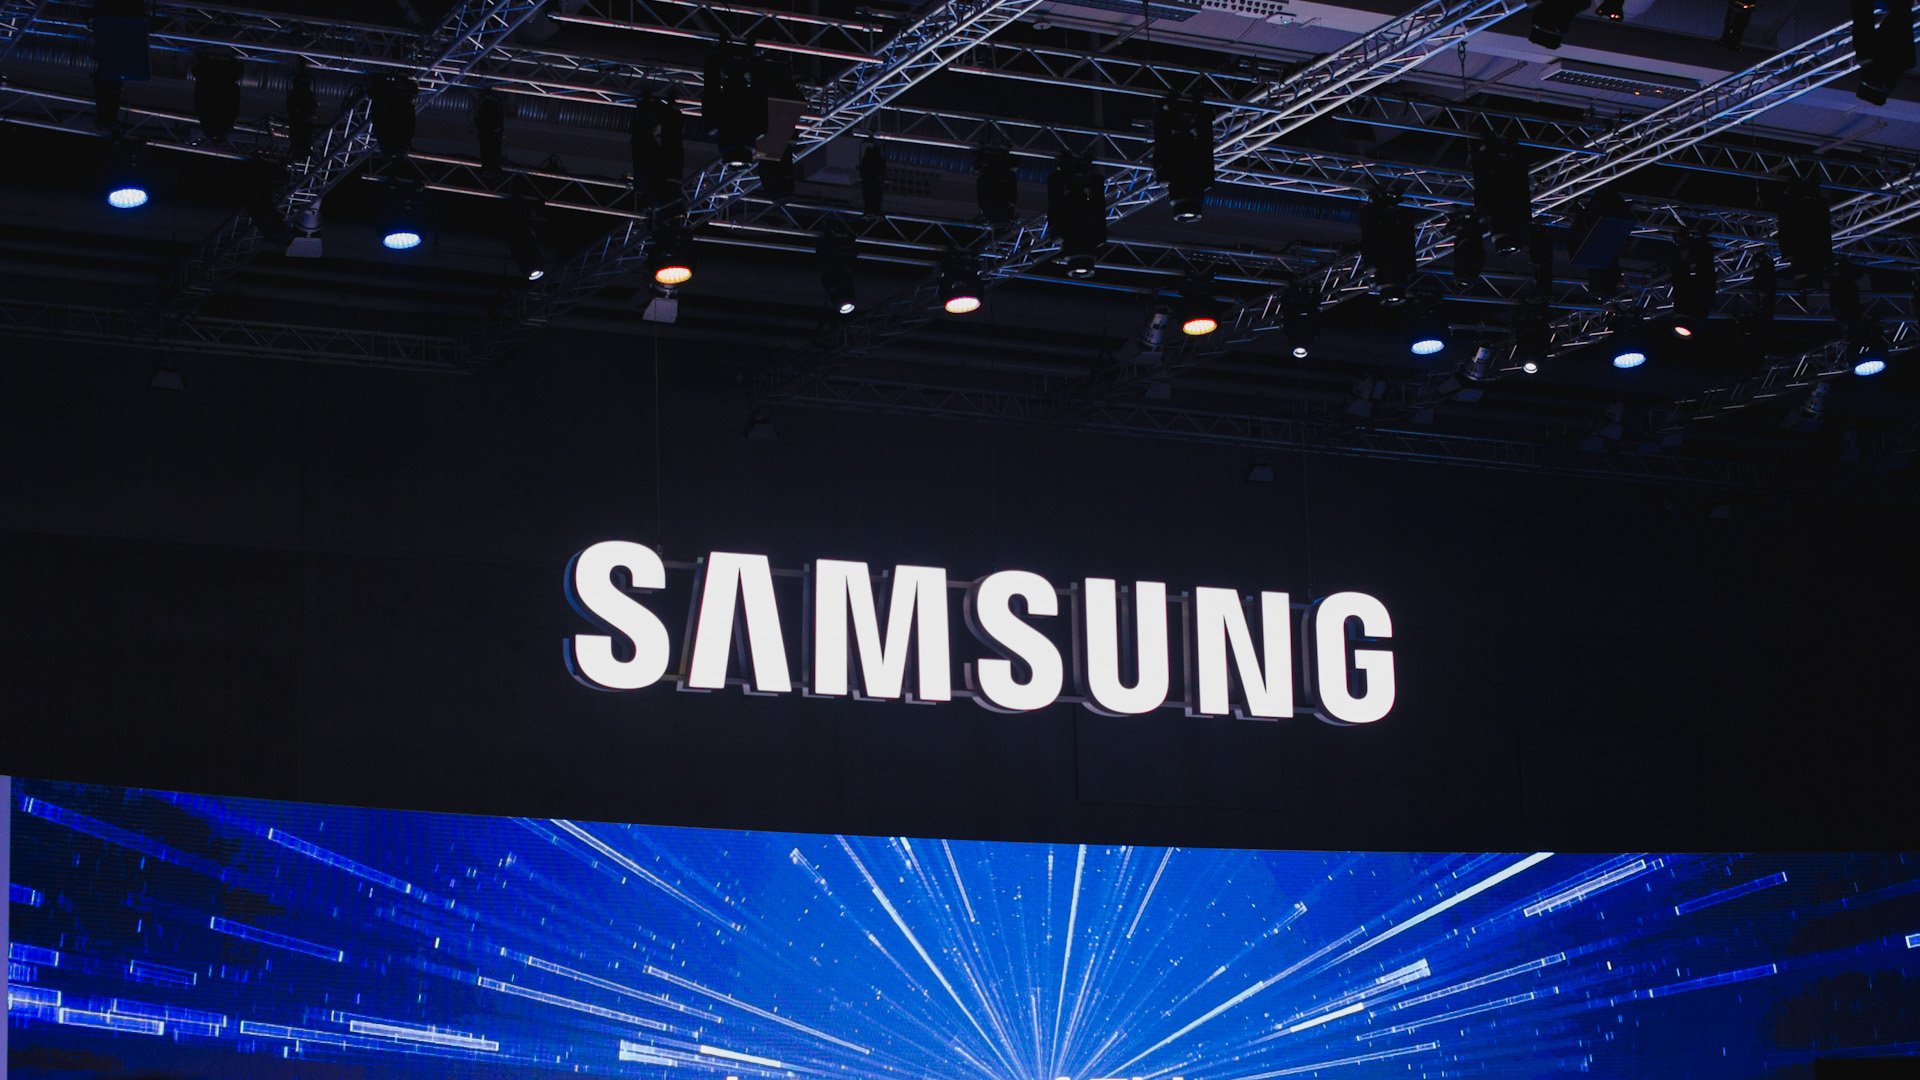 Review Samsung Galaxy S5 Smartphone - NotebookCheck.net Reviews